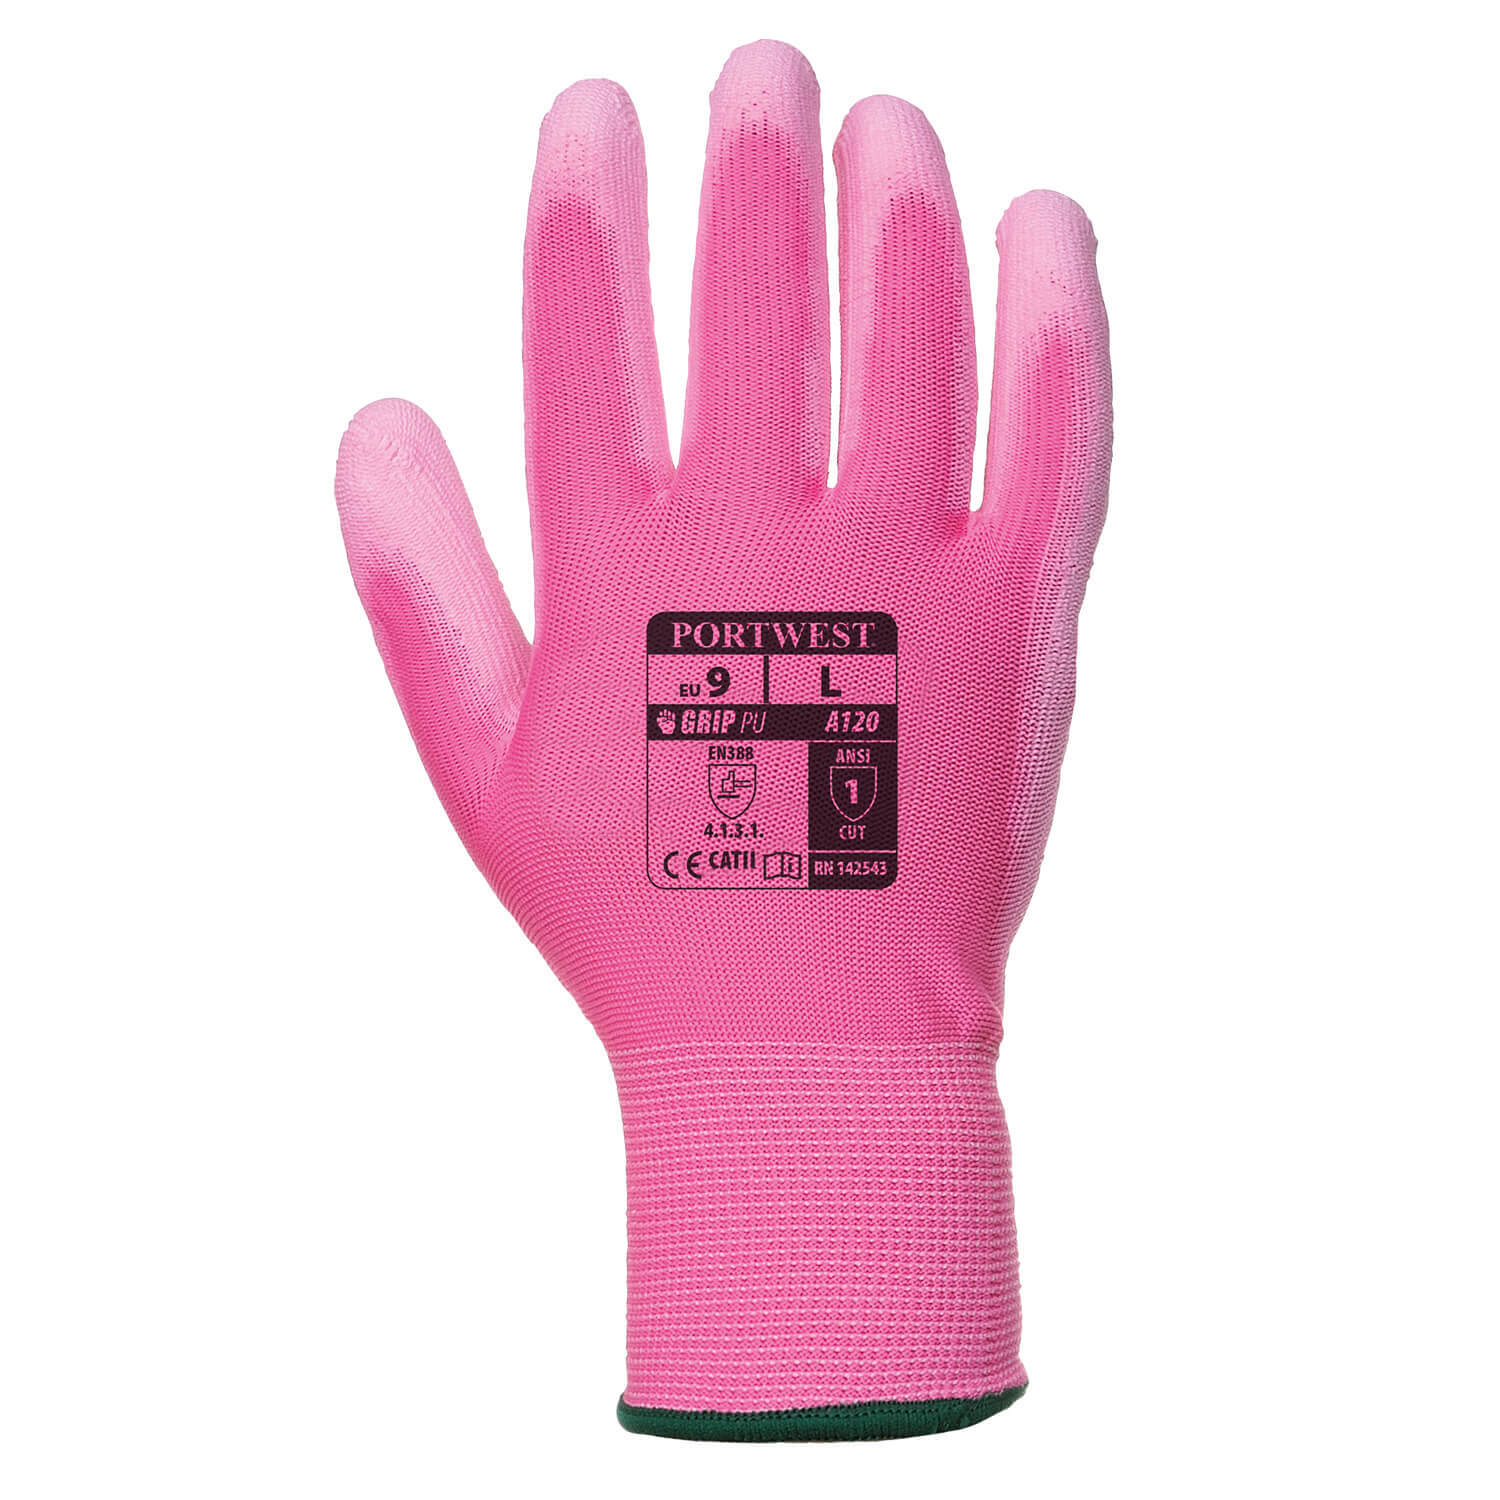 Image of Portwest PU Palm General Handling Grip Gloves Pink S